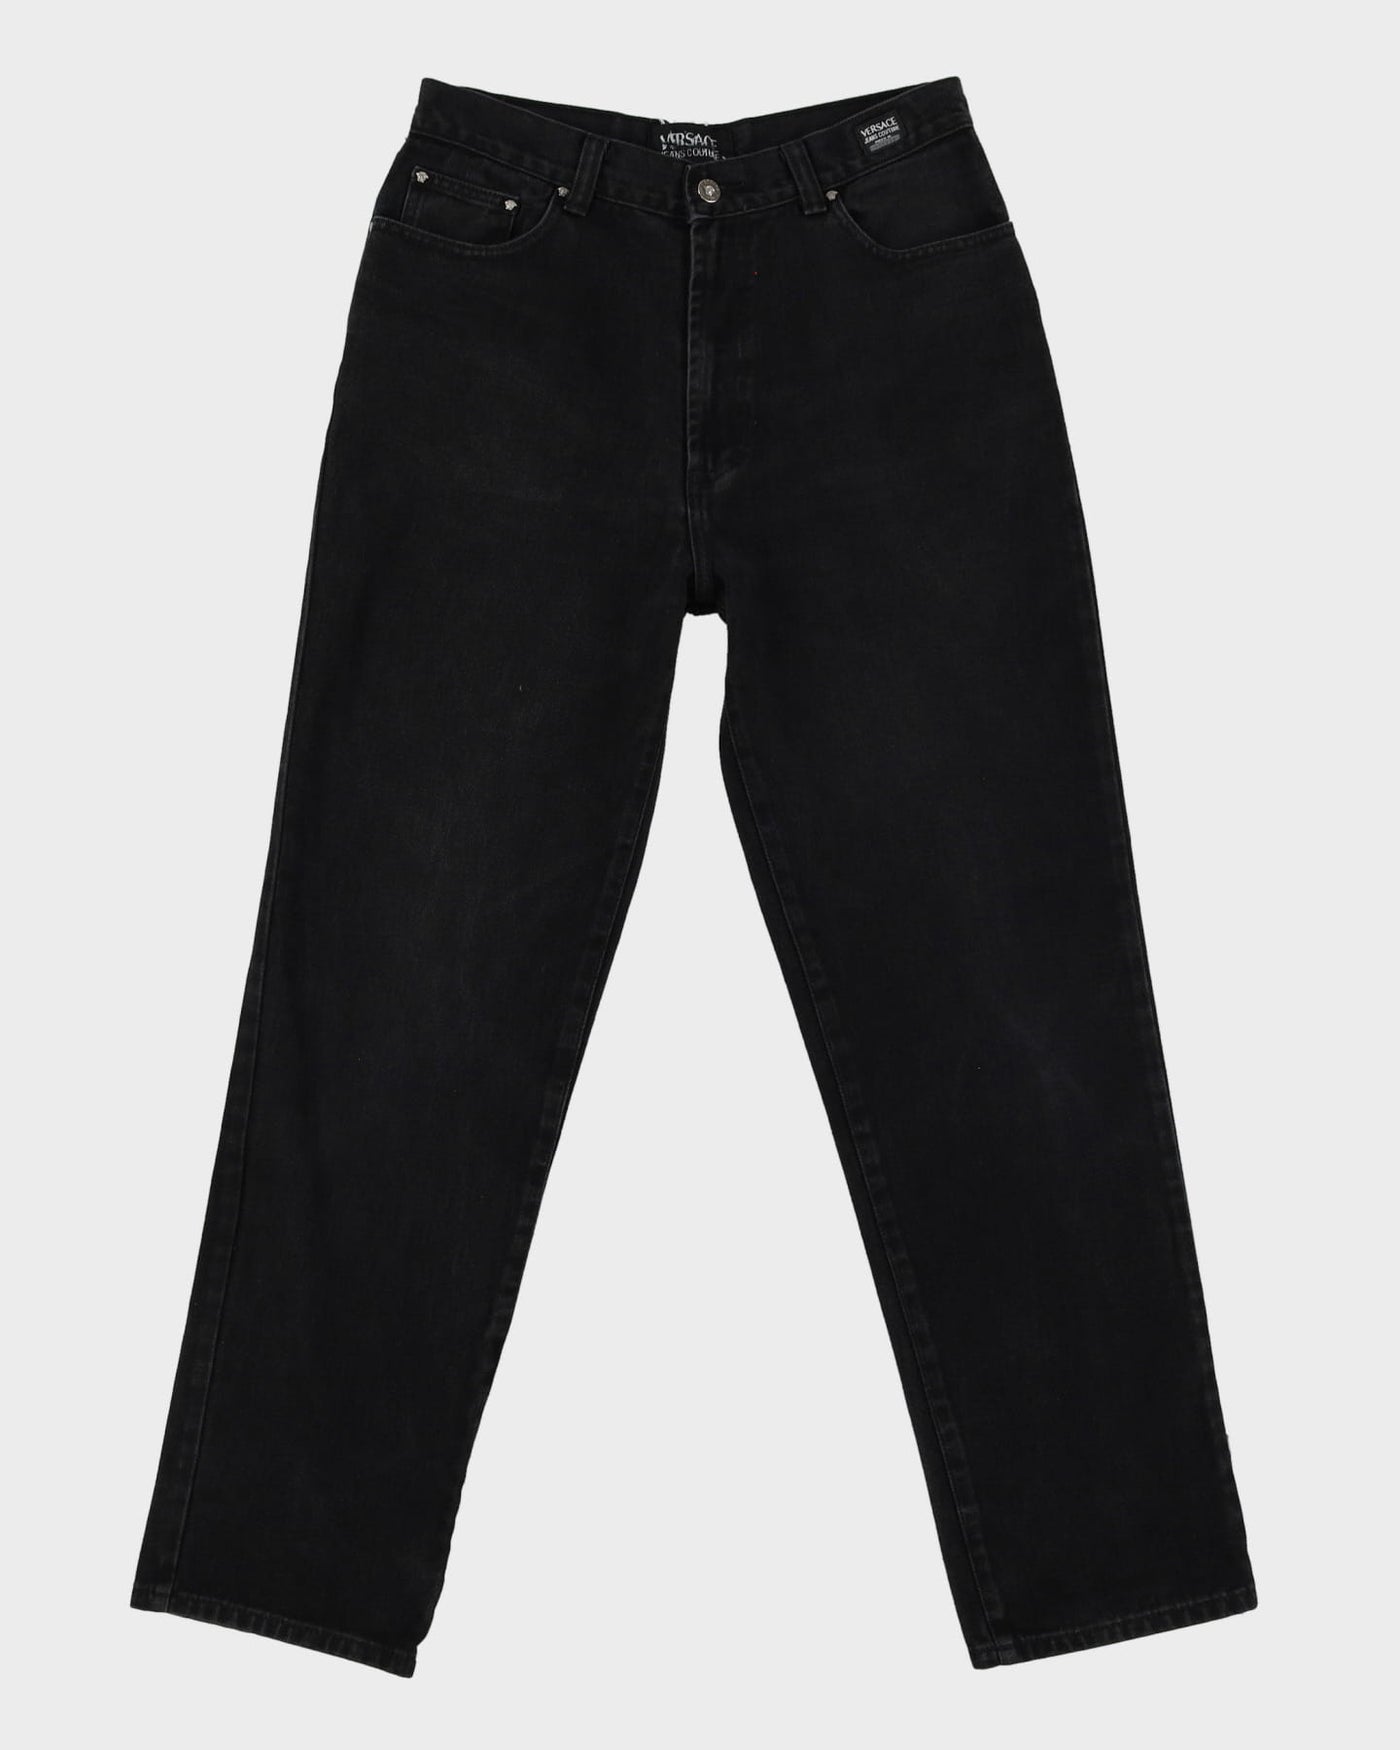 Vintage 90s Versace Dark Wash Black Jeans - W31 L31